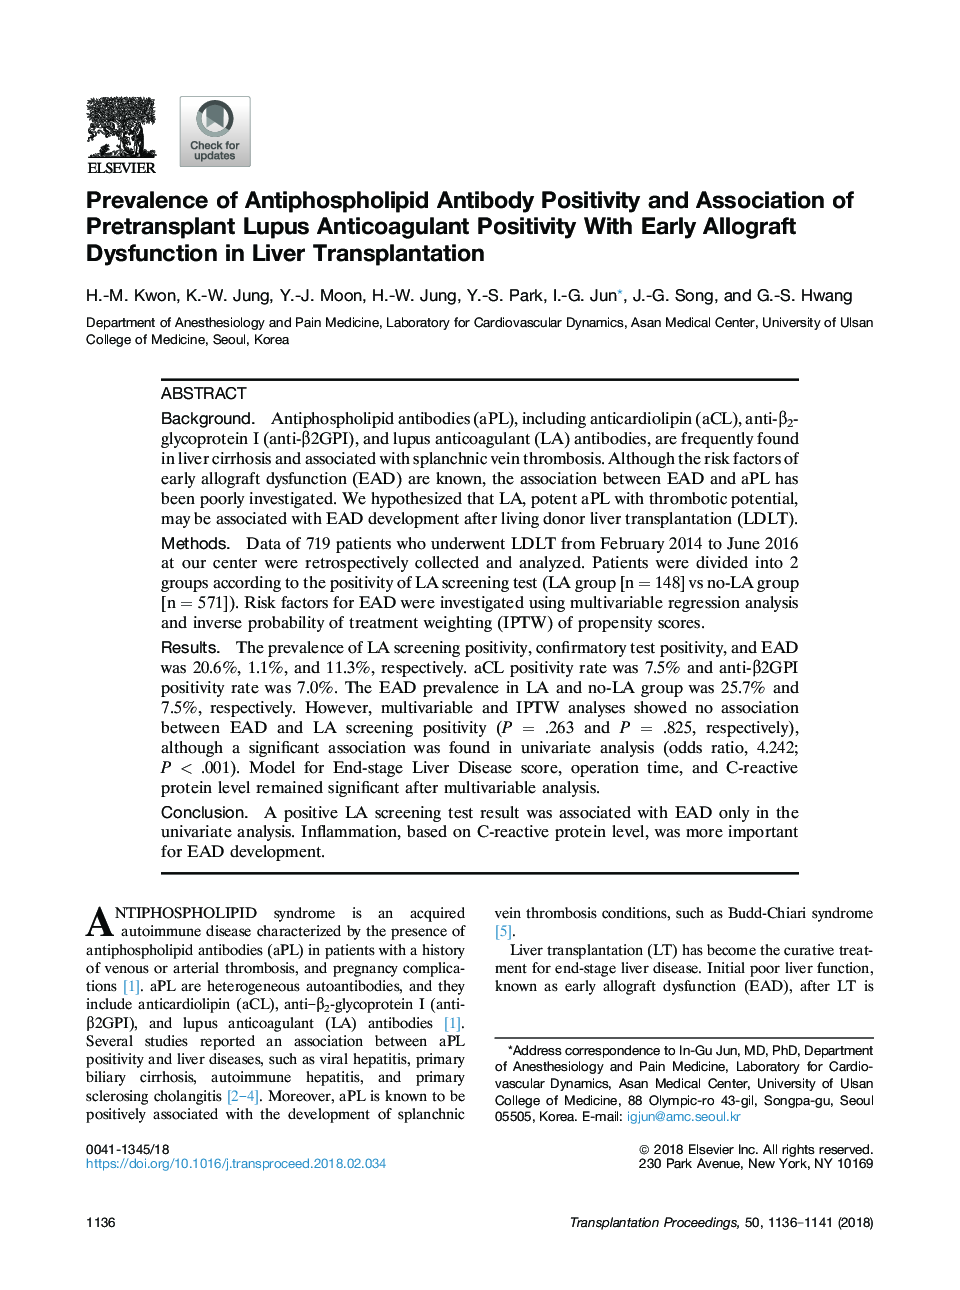 Prevalence of Antiphospholipid Antibody Positivity and Association of Pretransplant Lupus Anticoagulant Positivity With Early Allograft Dysfunction in Liver Transplantation